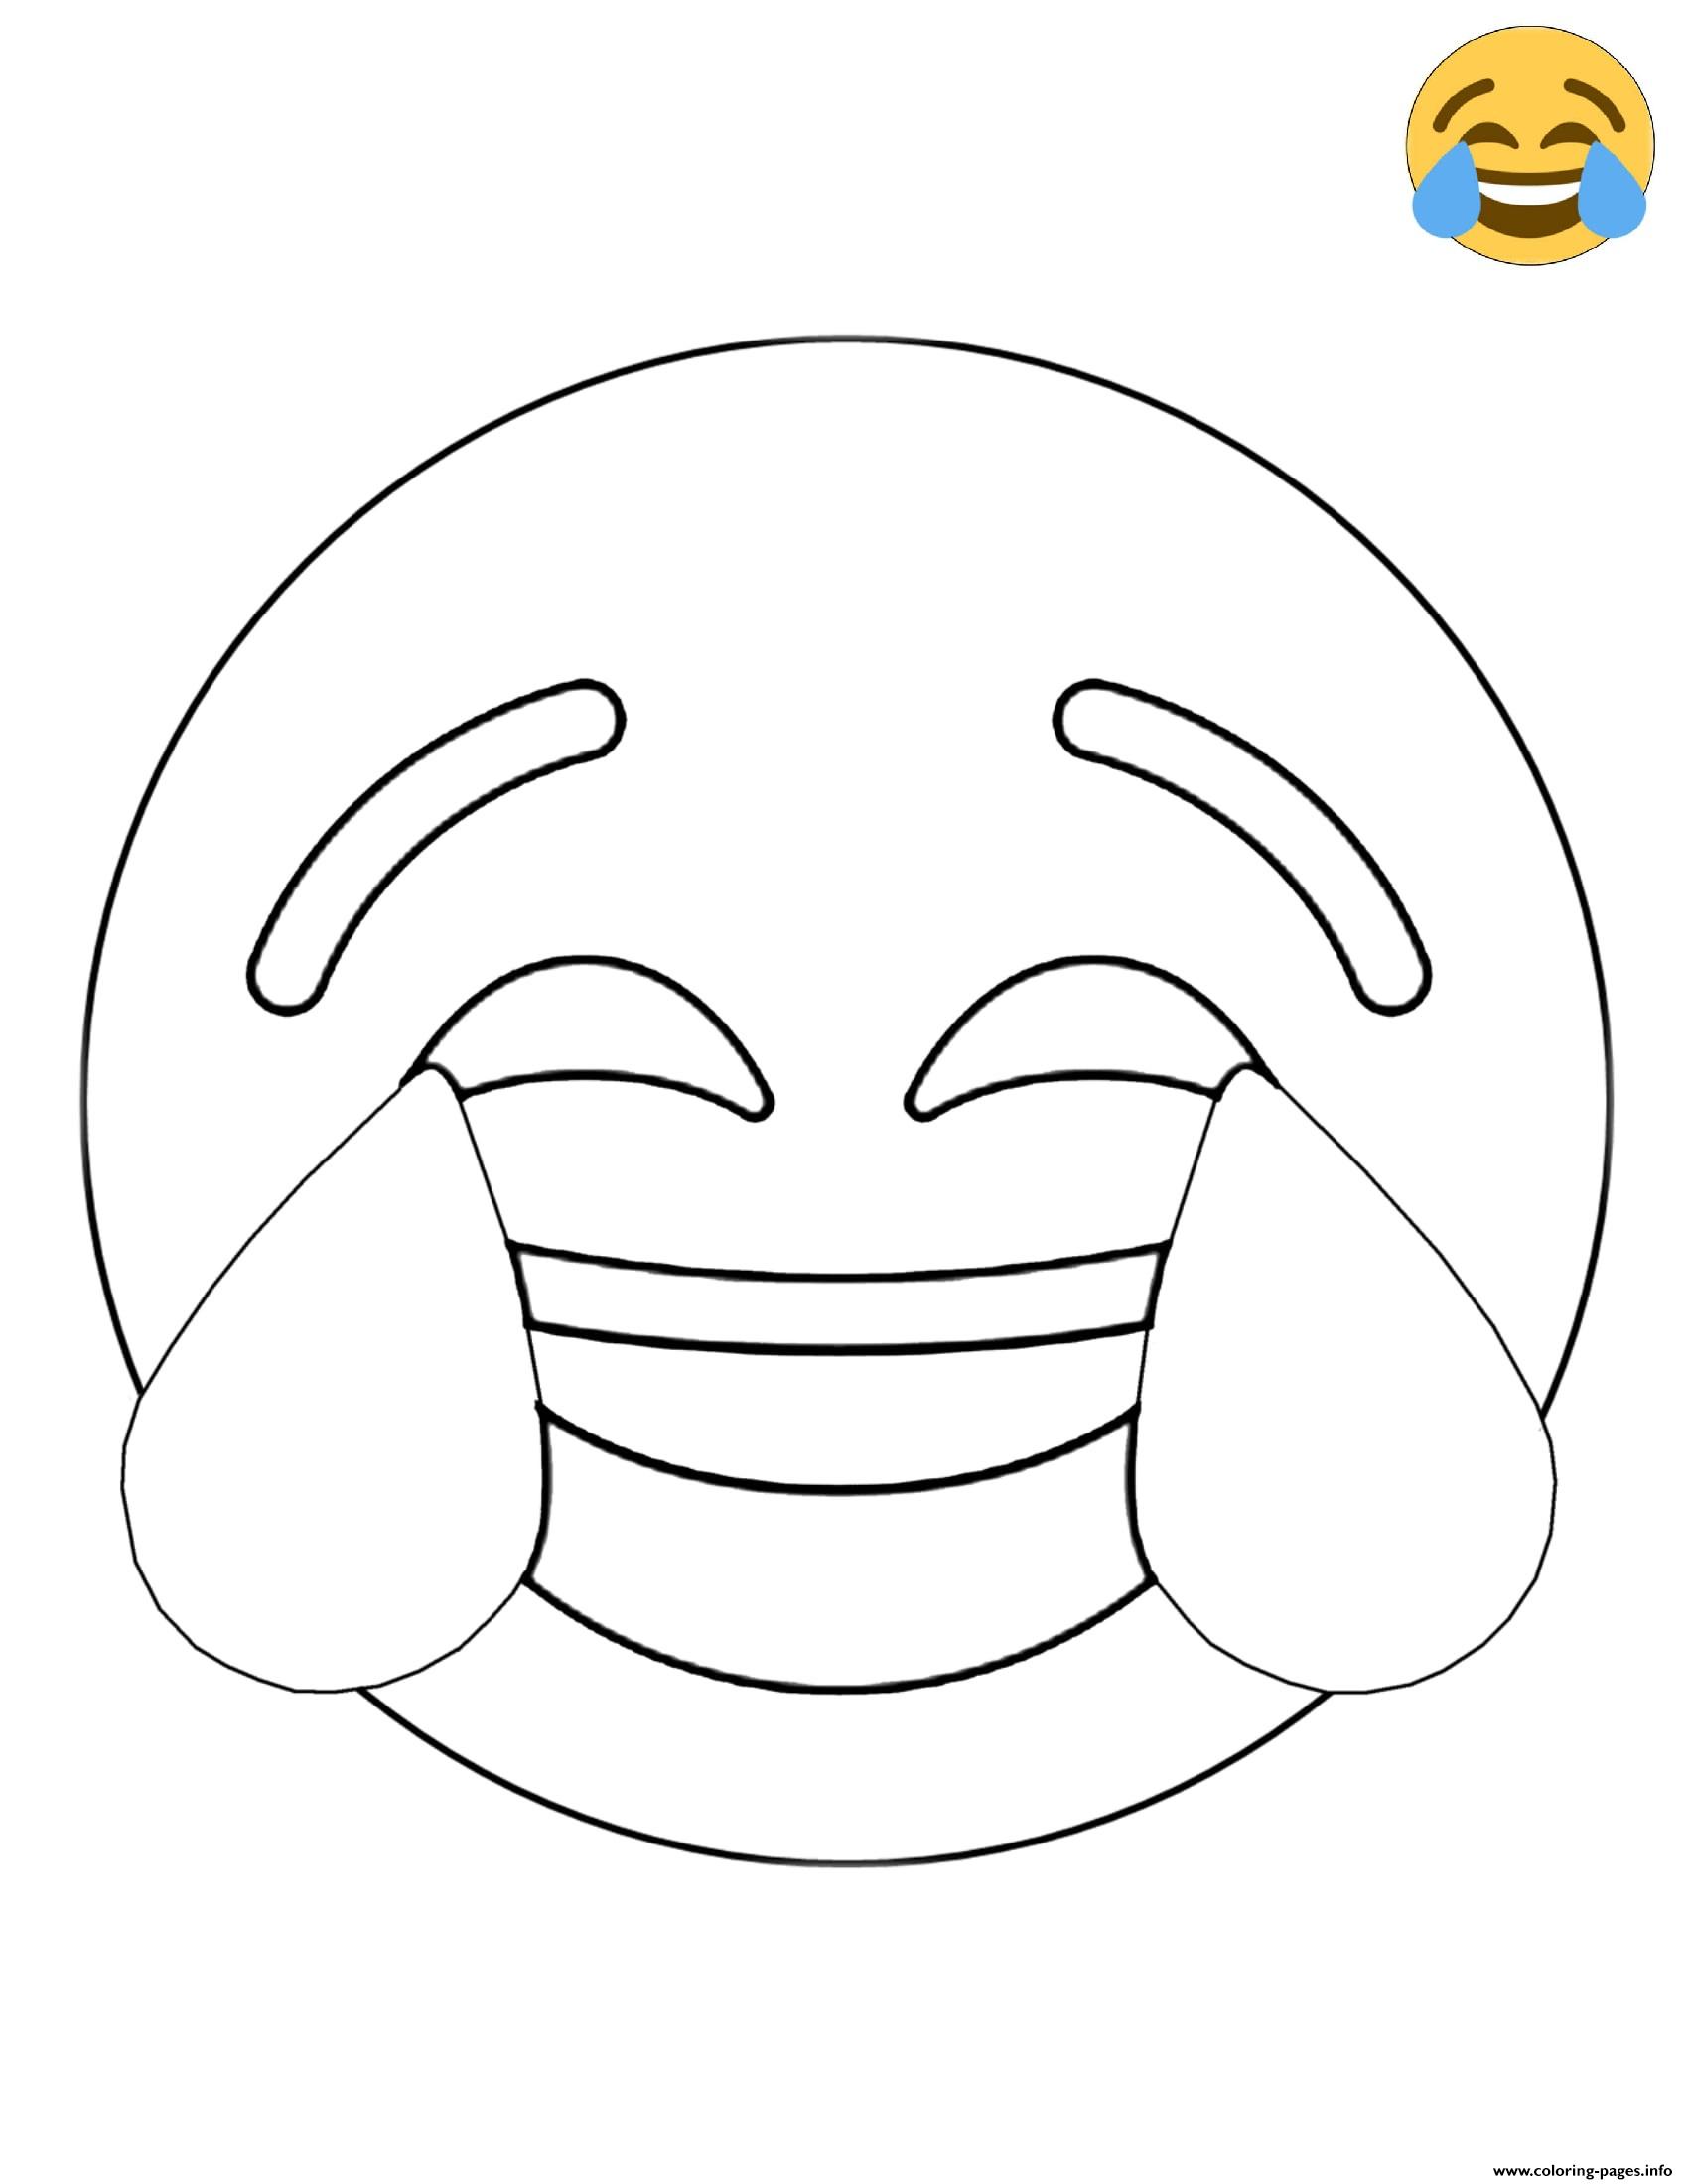 Twitter Crying Laughing Emoji coloring